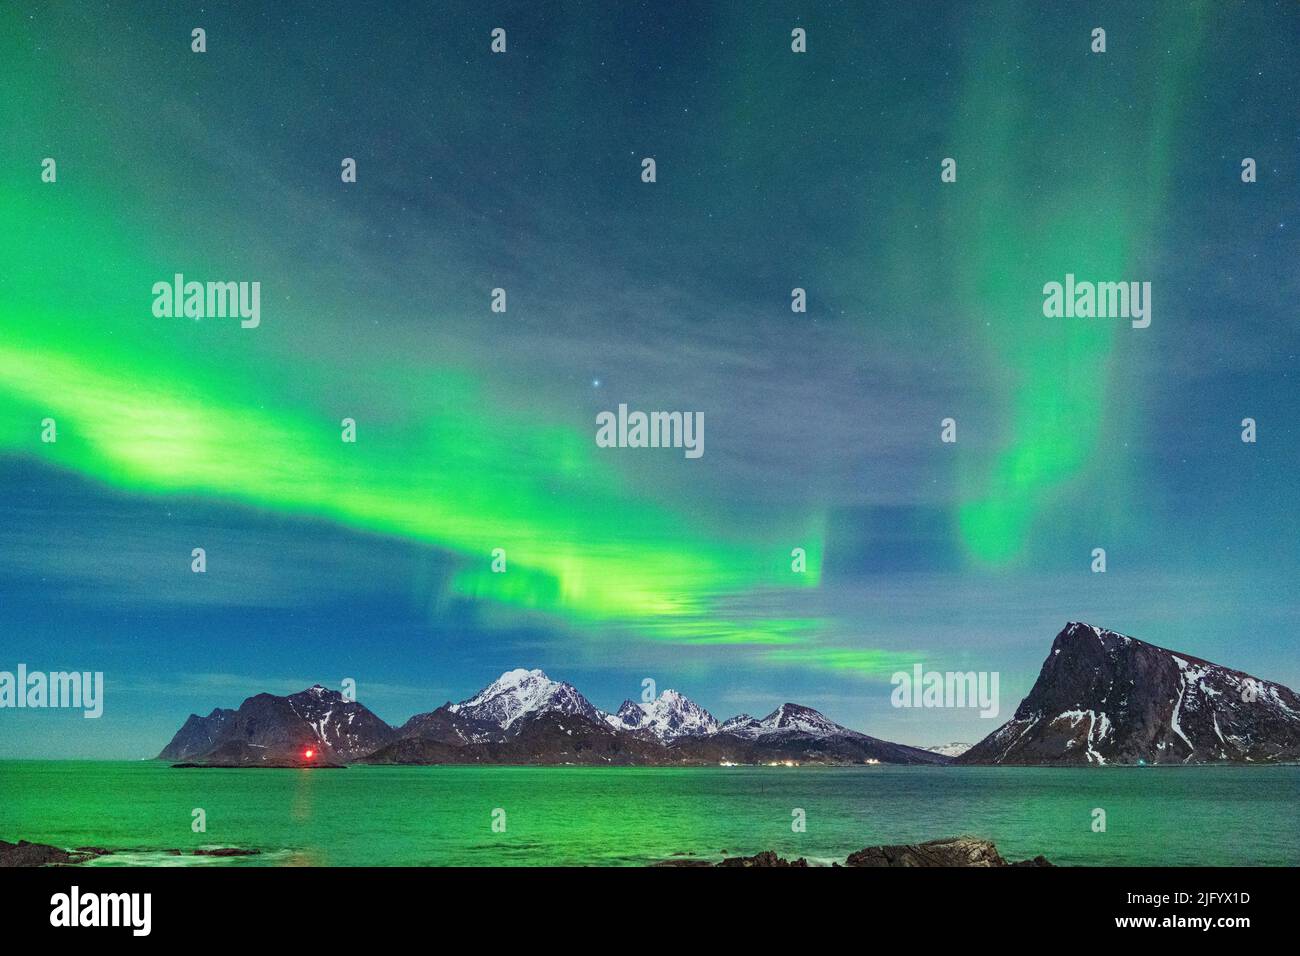 Starry sky with Aurora Borealis (Northern Lights) over mountains and cold sea, Myrland, Leknes, Vestvagoy, Lofoten Islands, Norway, Scandinavia Stock Photo